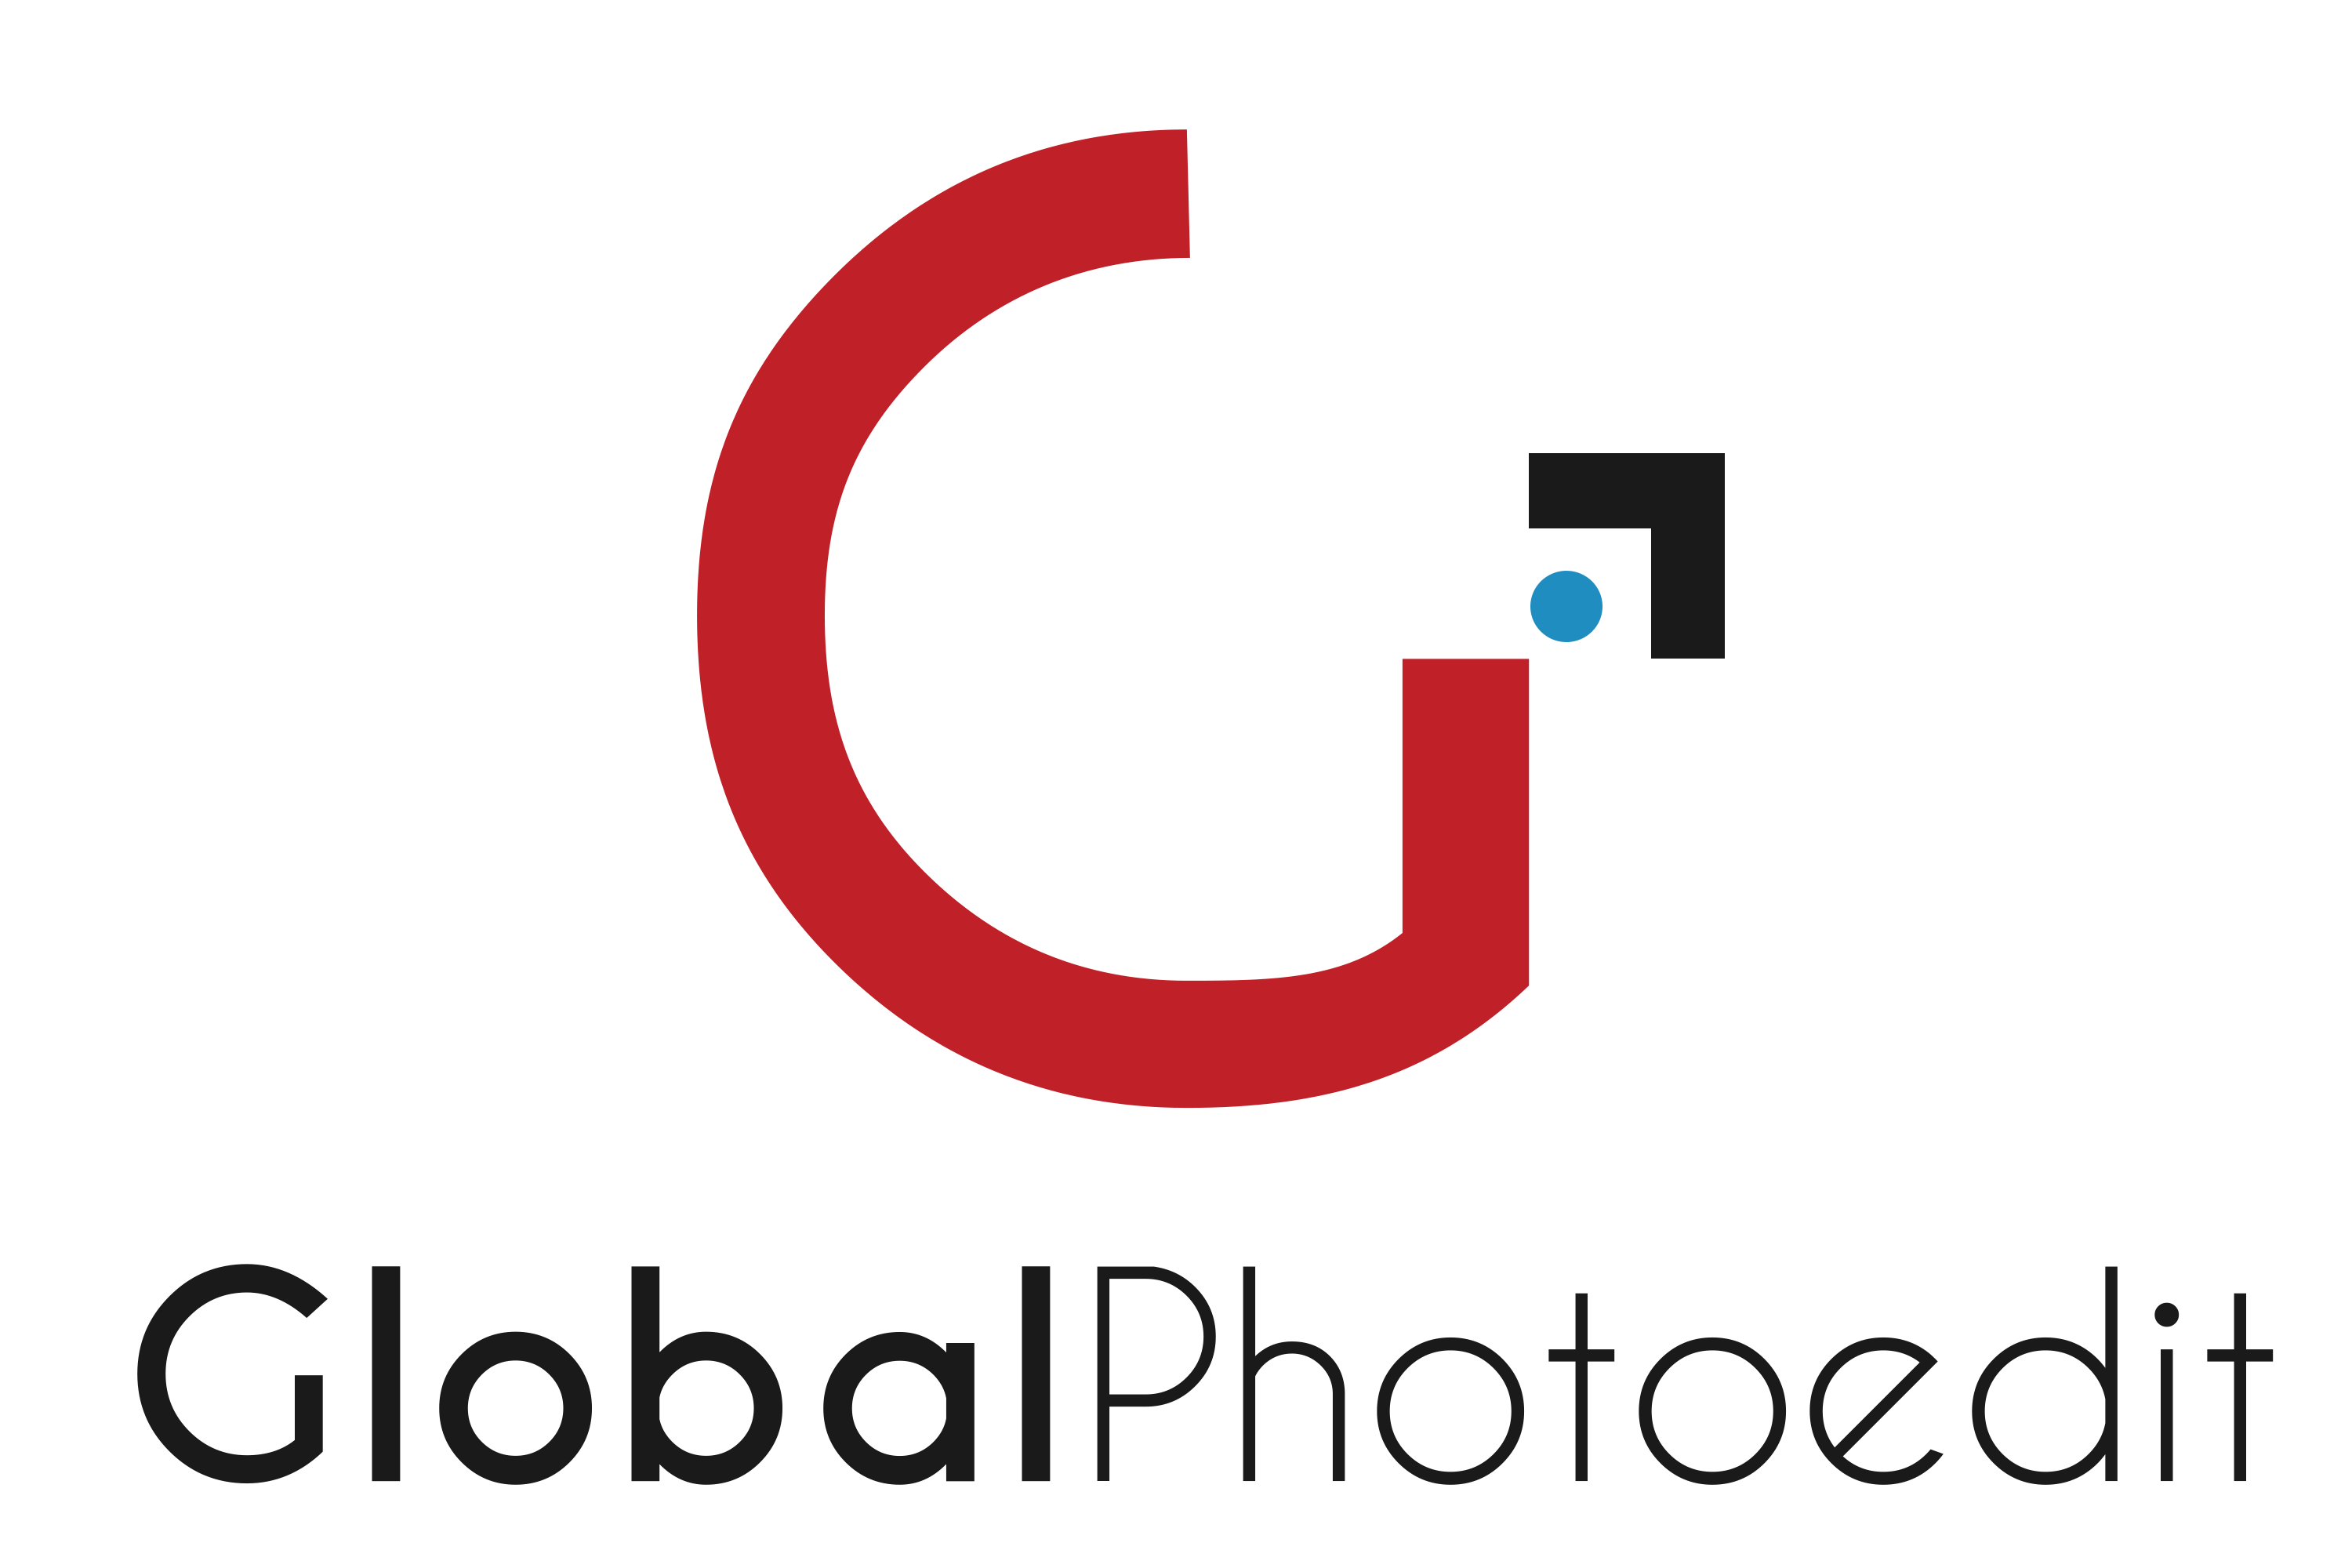 Global Photo Edit